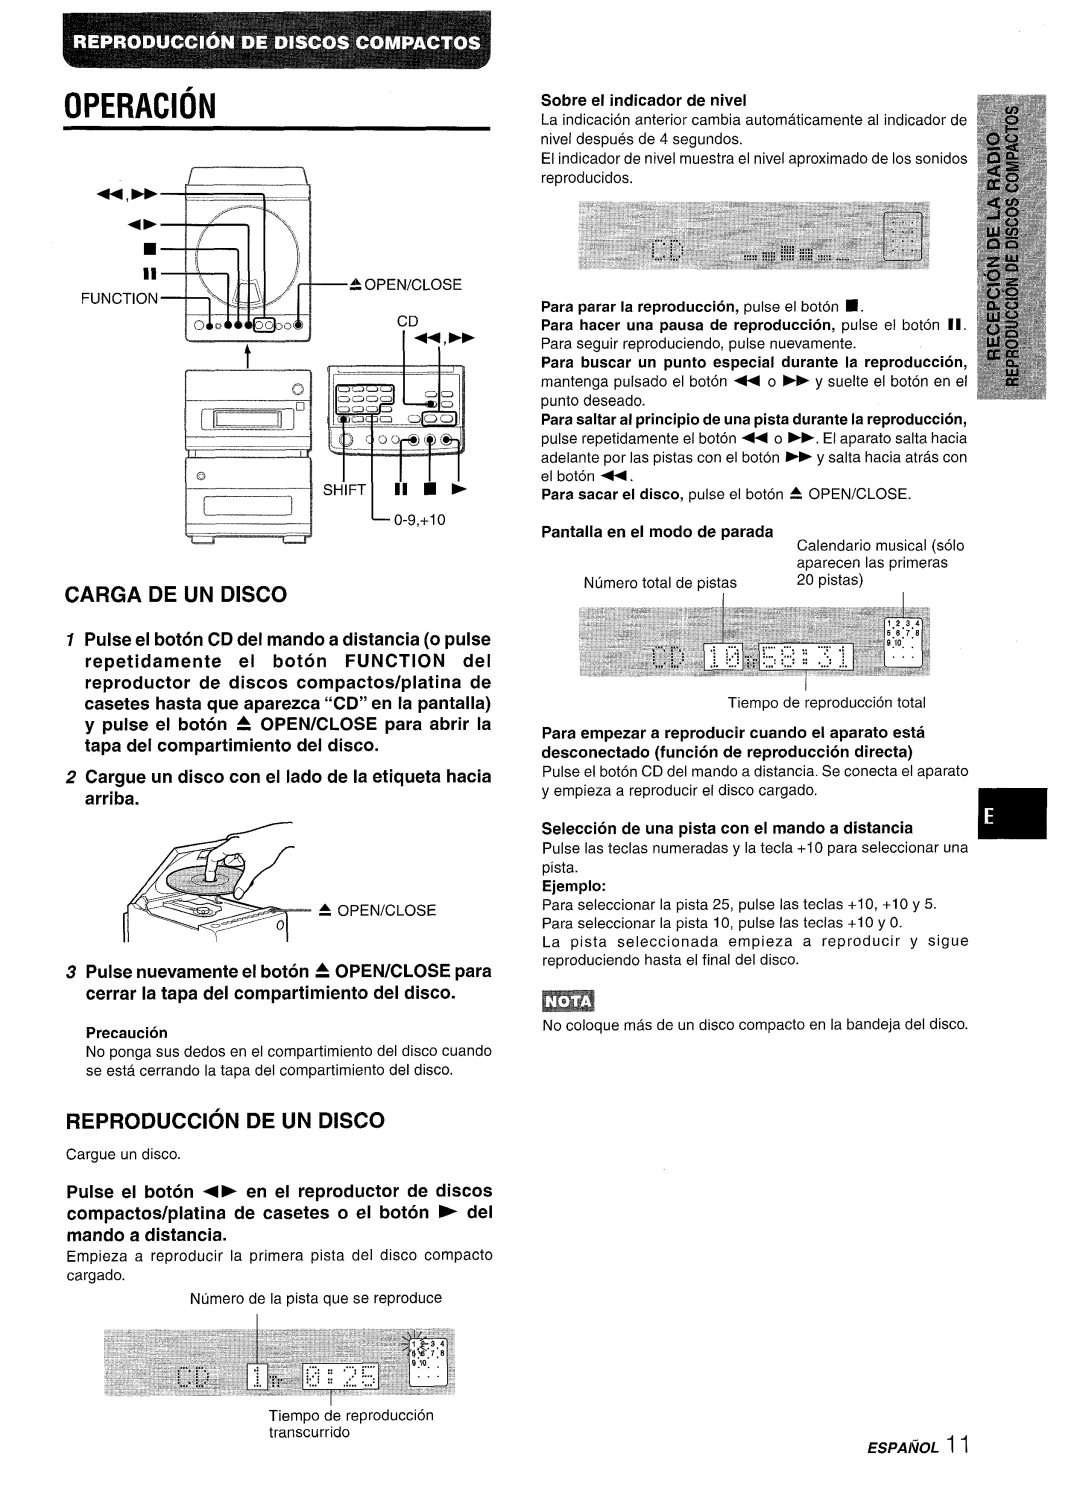 Aiwa XR-M88 manual Operacion, Carga De Un Disco, Reproduction De Un Disco, Pulse el boton CD del mando a distancia o pulse 